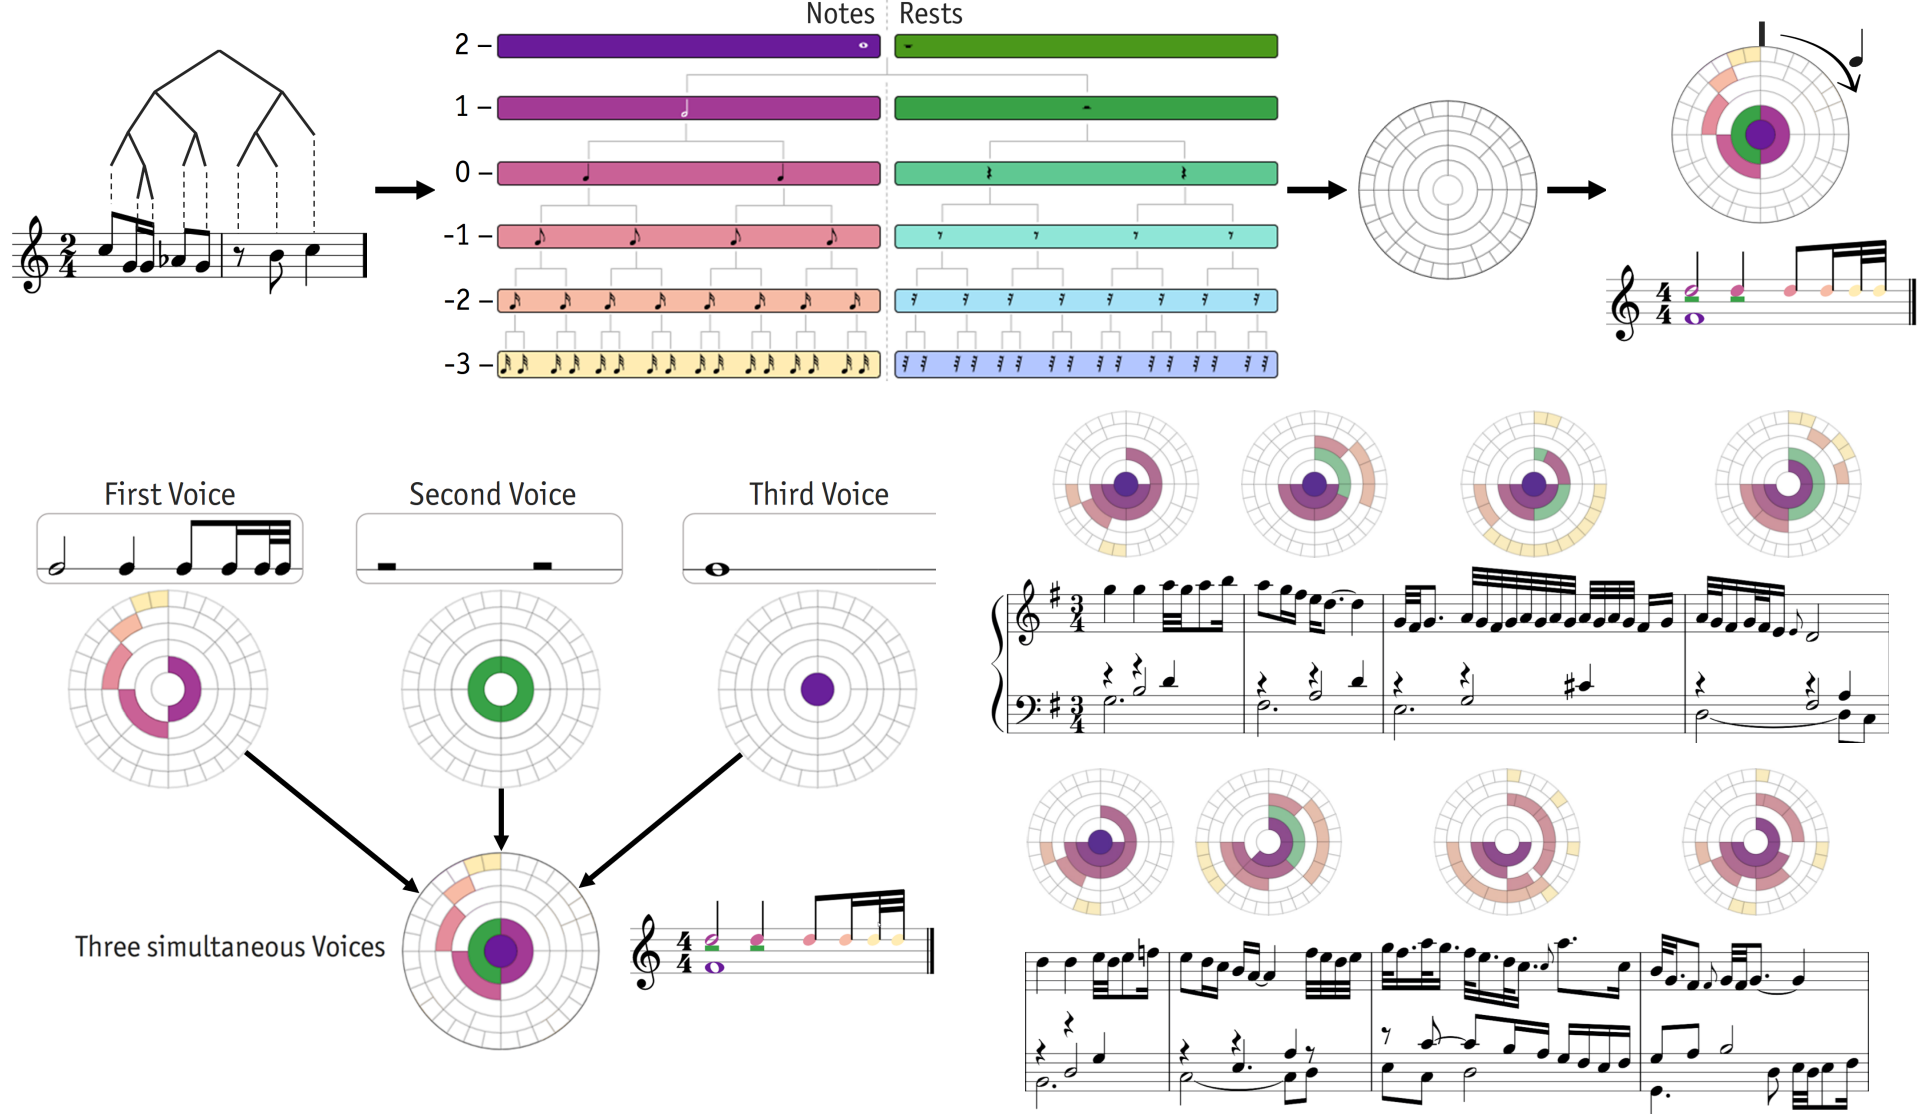 Augmenting Sheet Music with Rhythmic Fingerprints